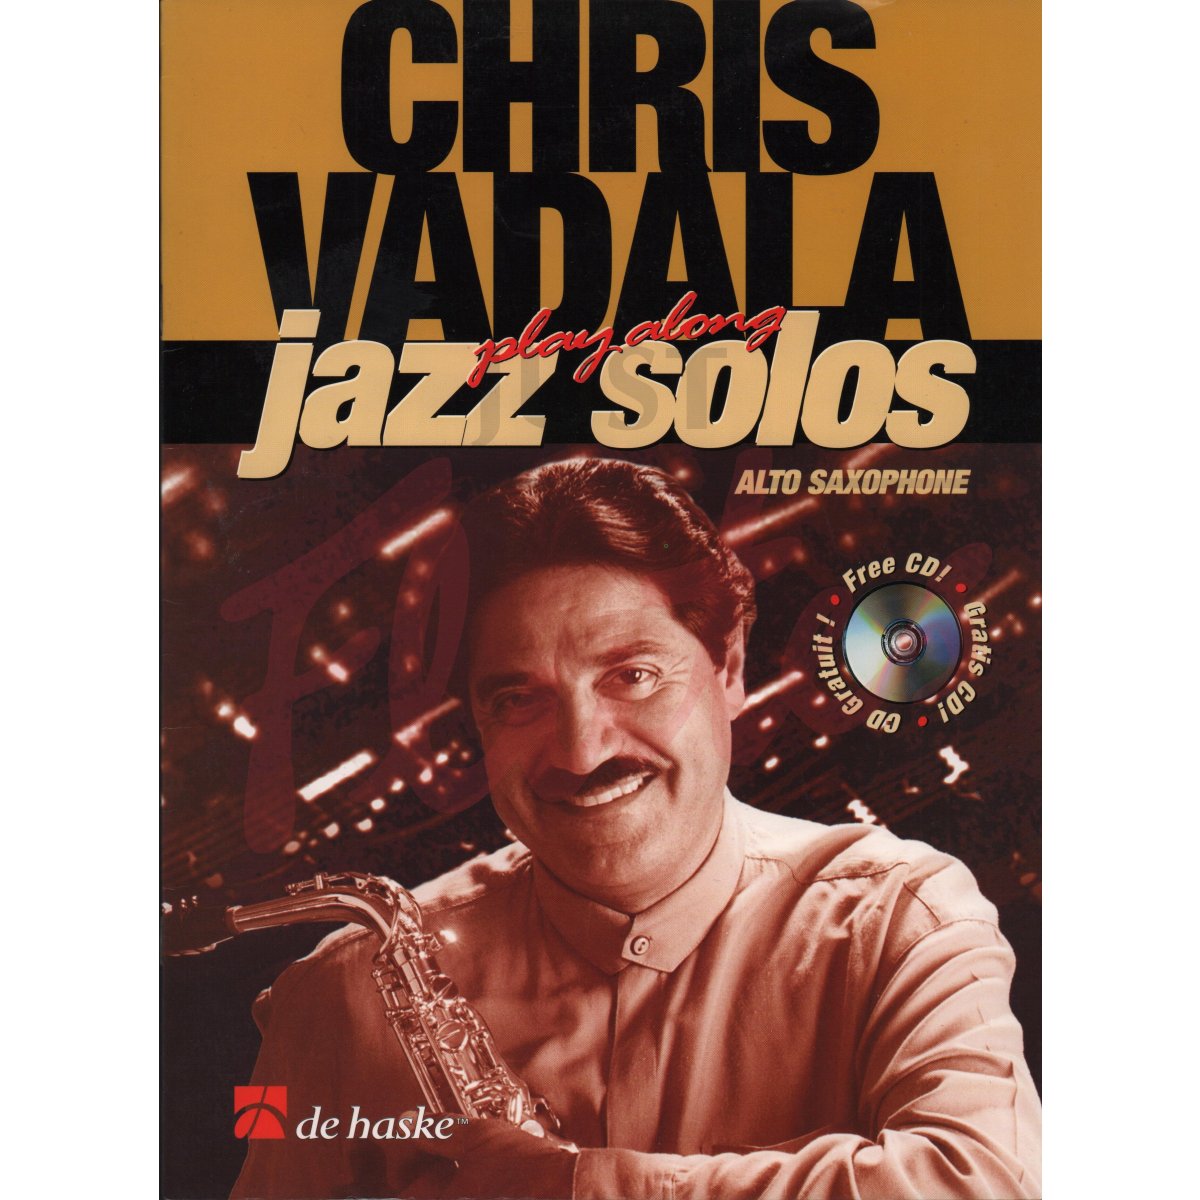 Chris Vadala Playalong Jazz Solos for Alto Saxophone